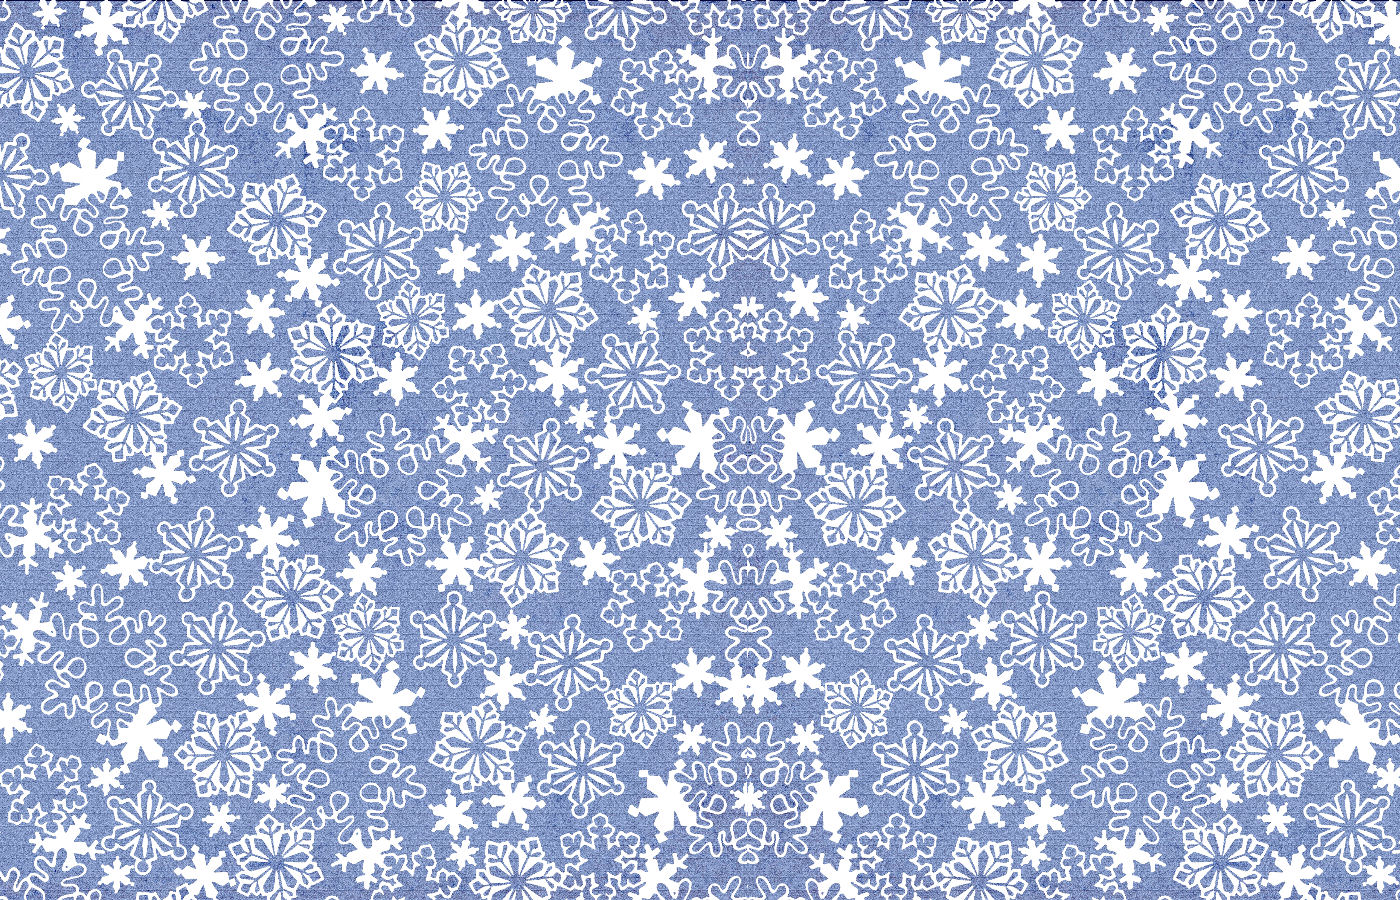 Snowflakes Background Themes